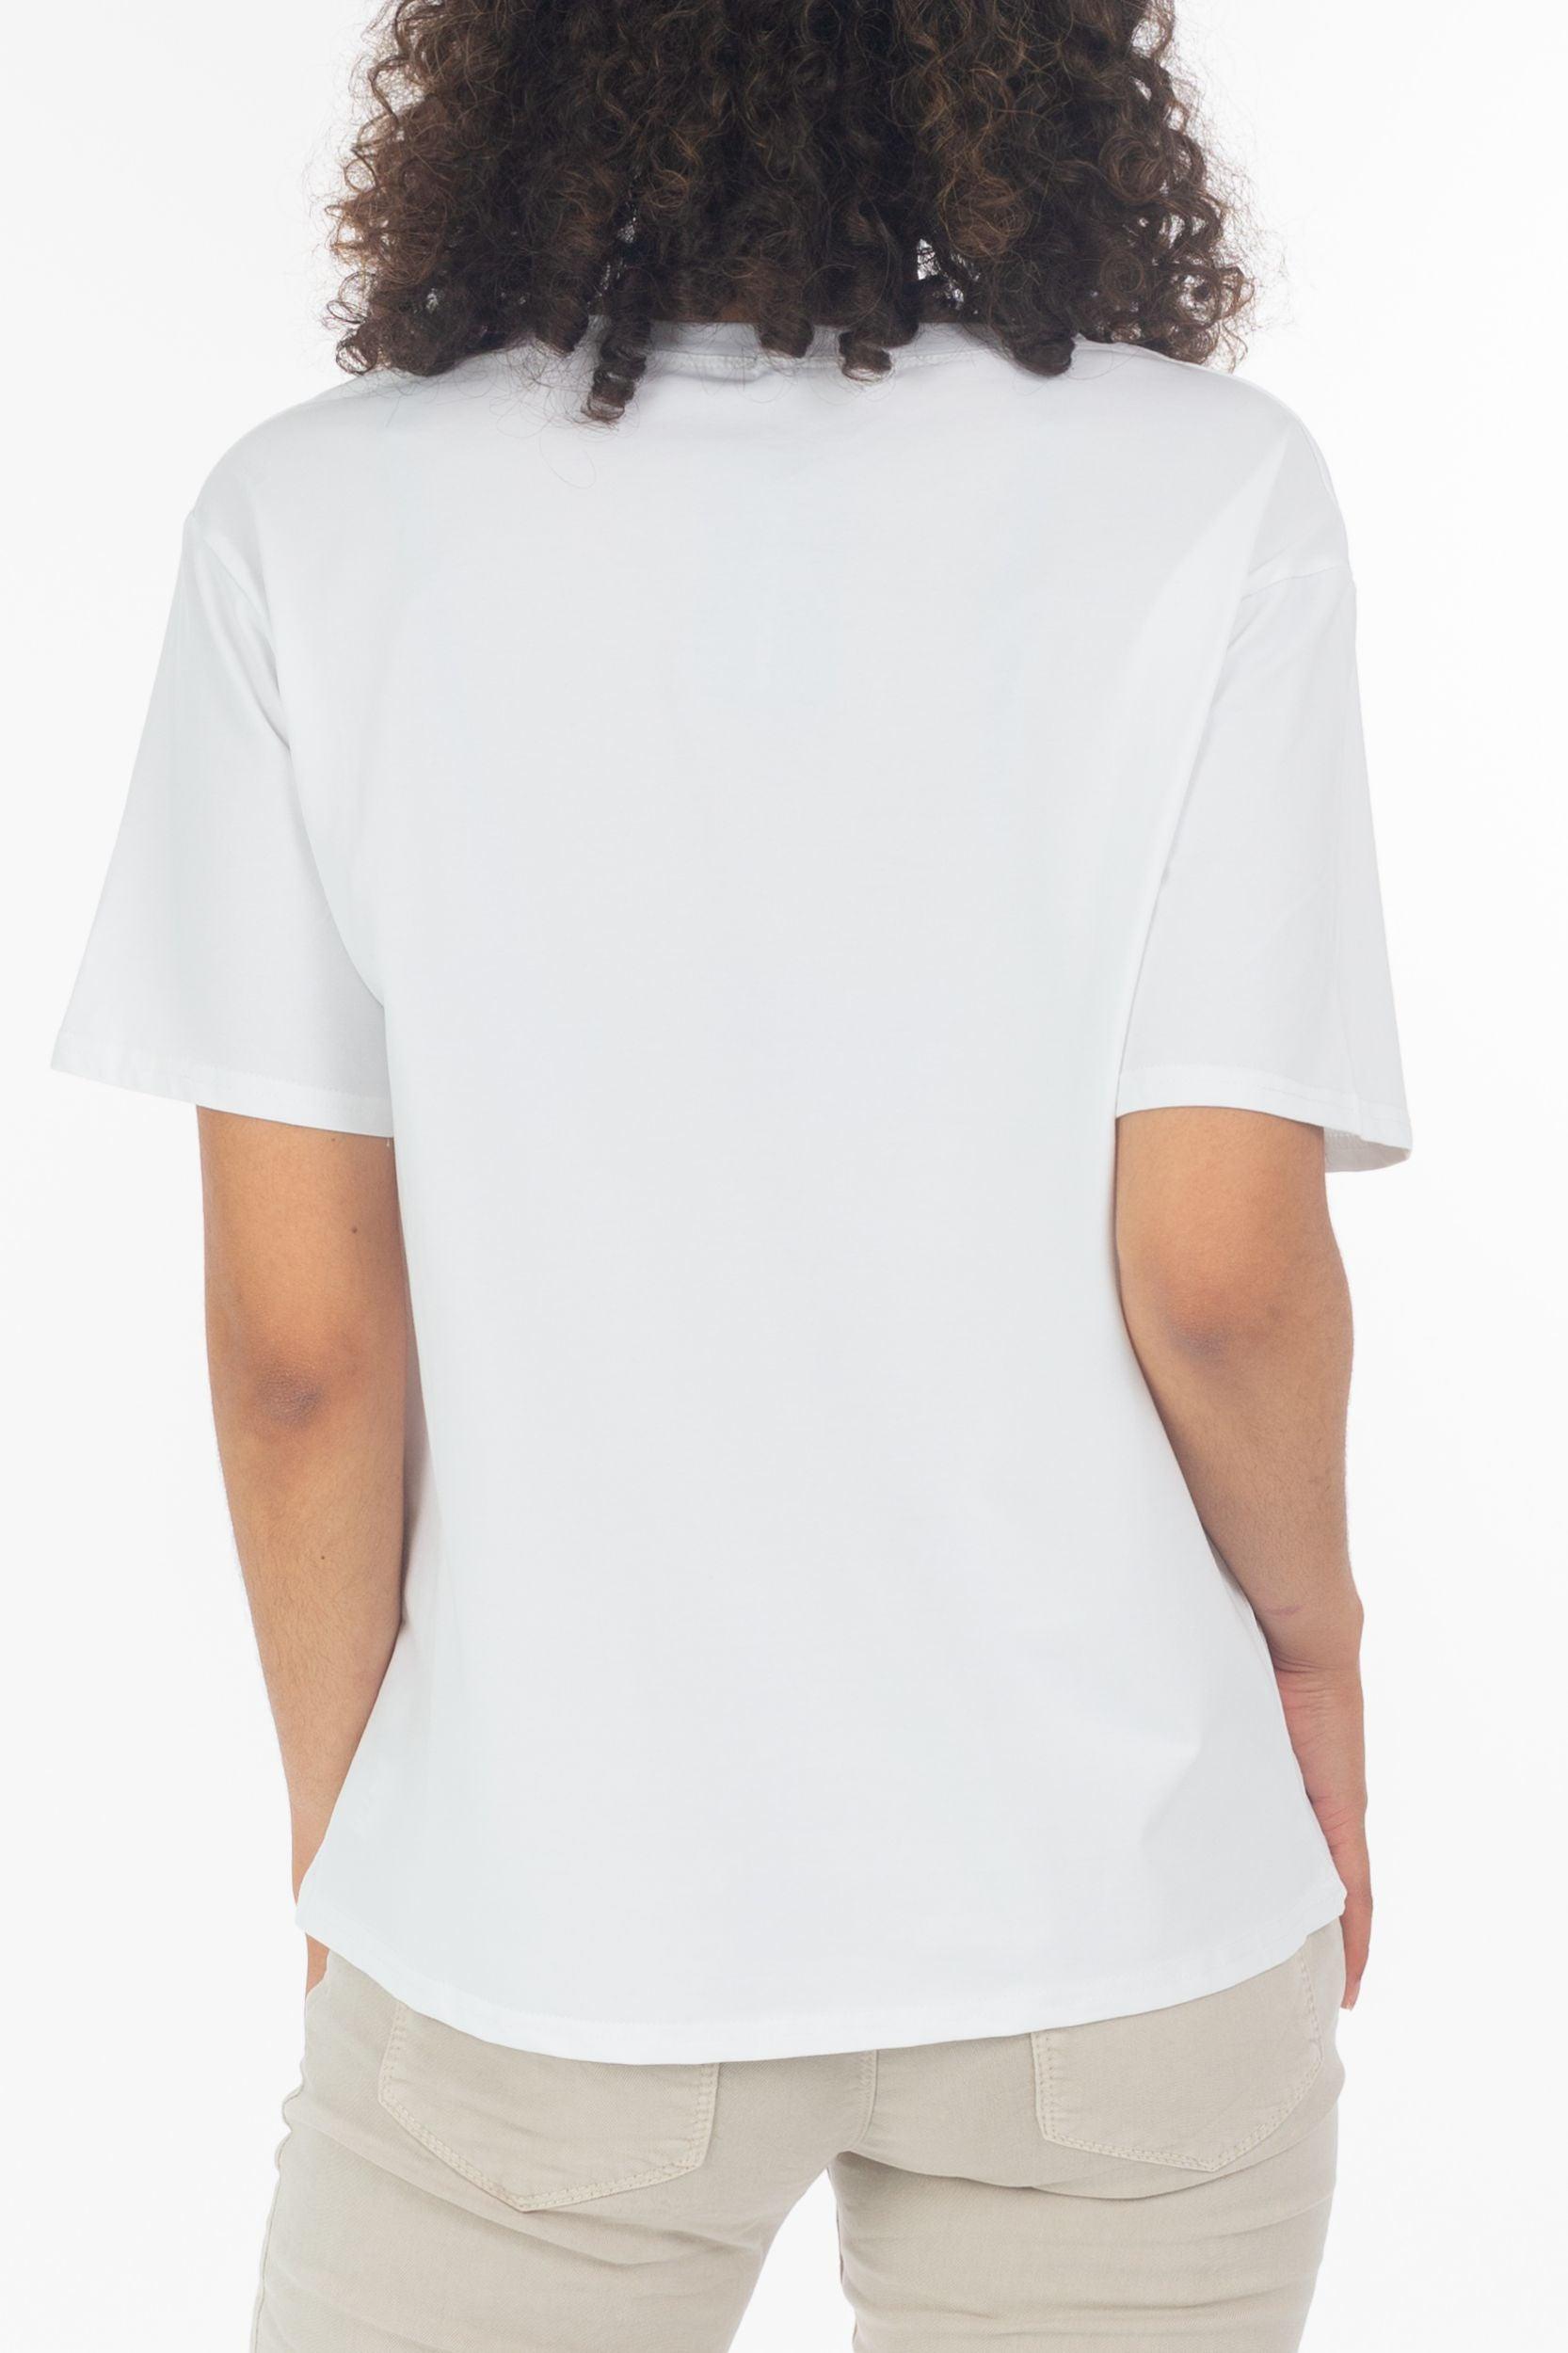 T-Shirt "Maus" - La Strada